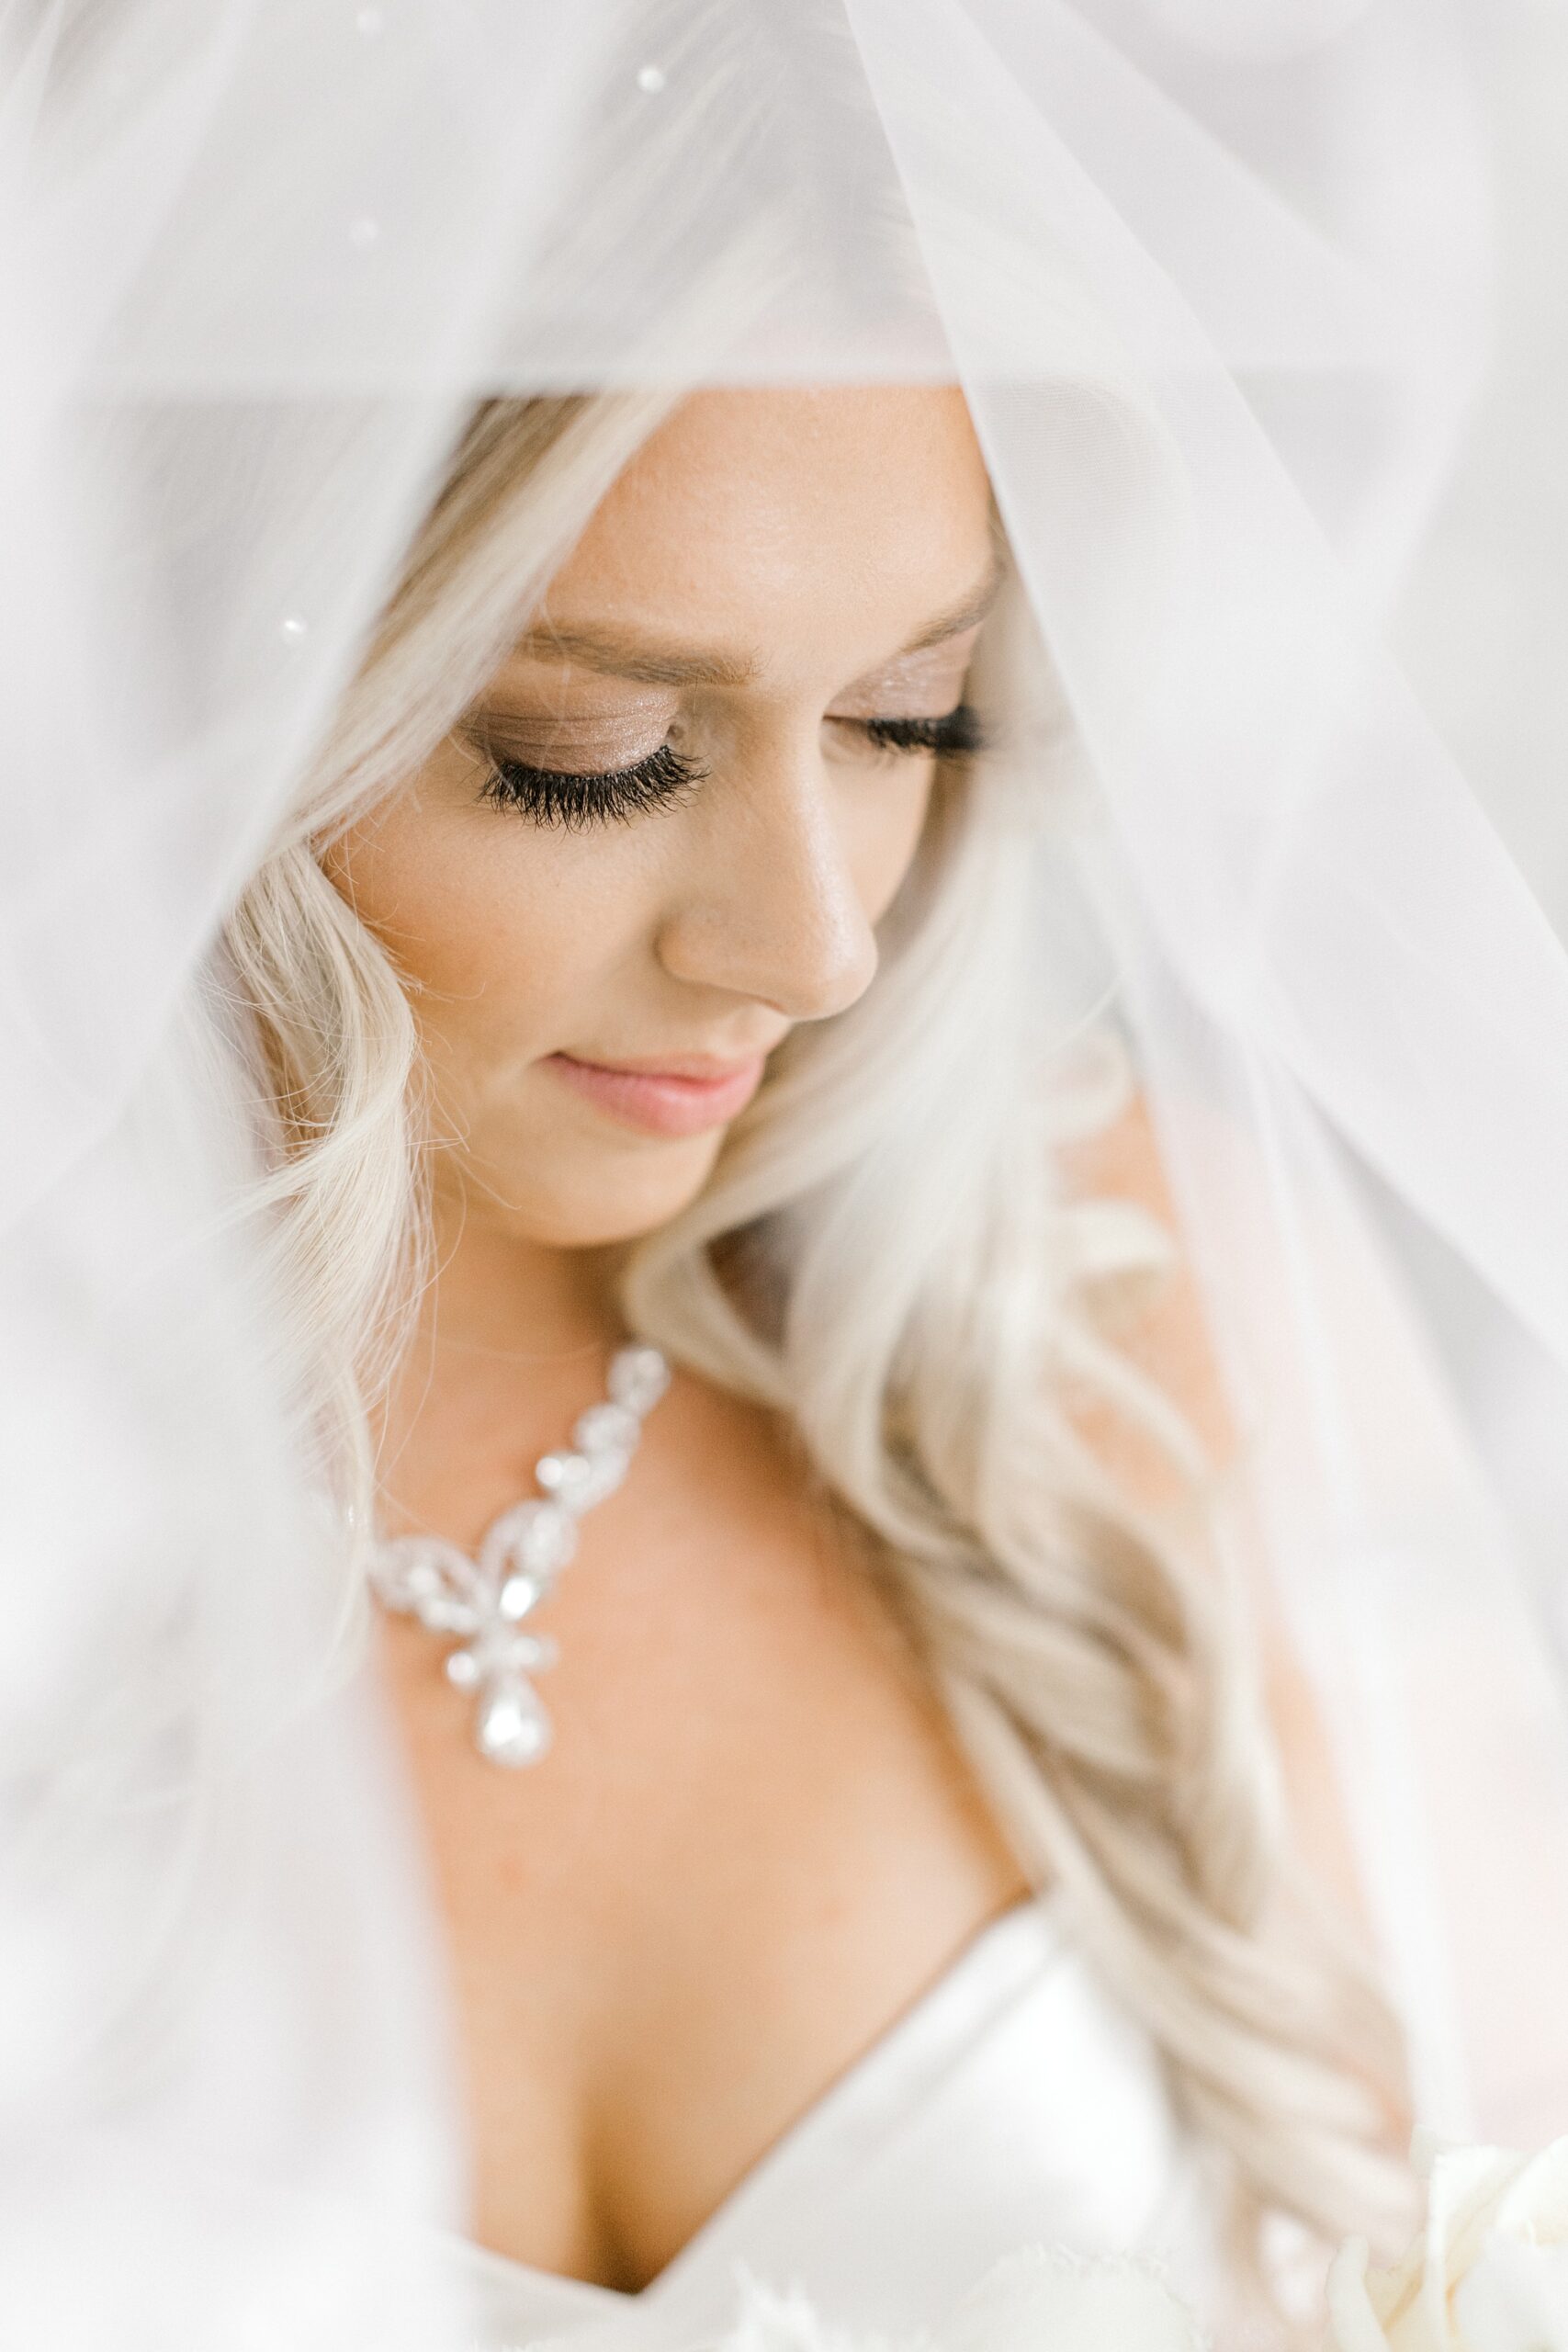 blonde bride looks down under veil with diamond necklace